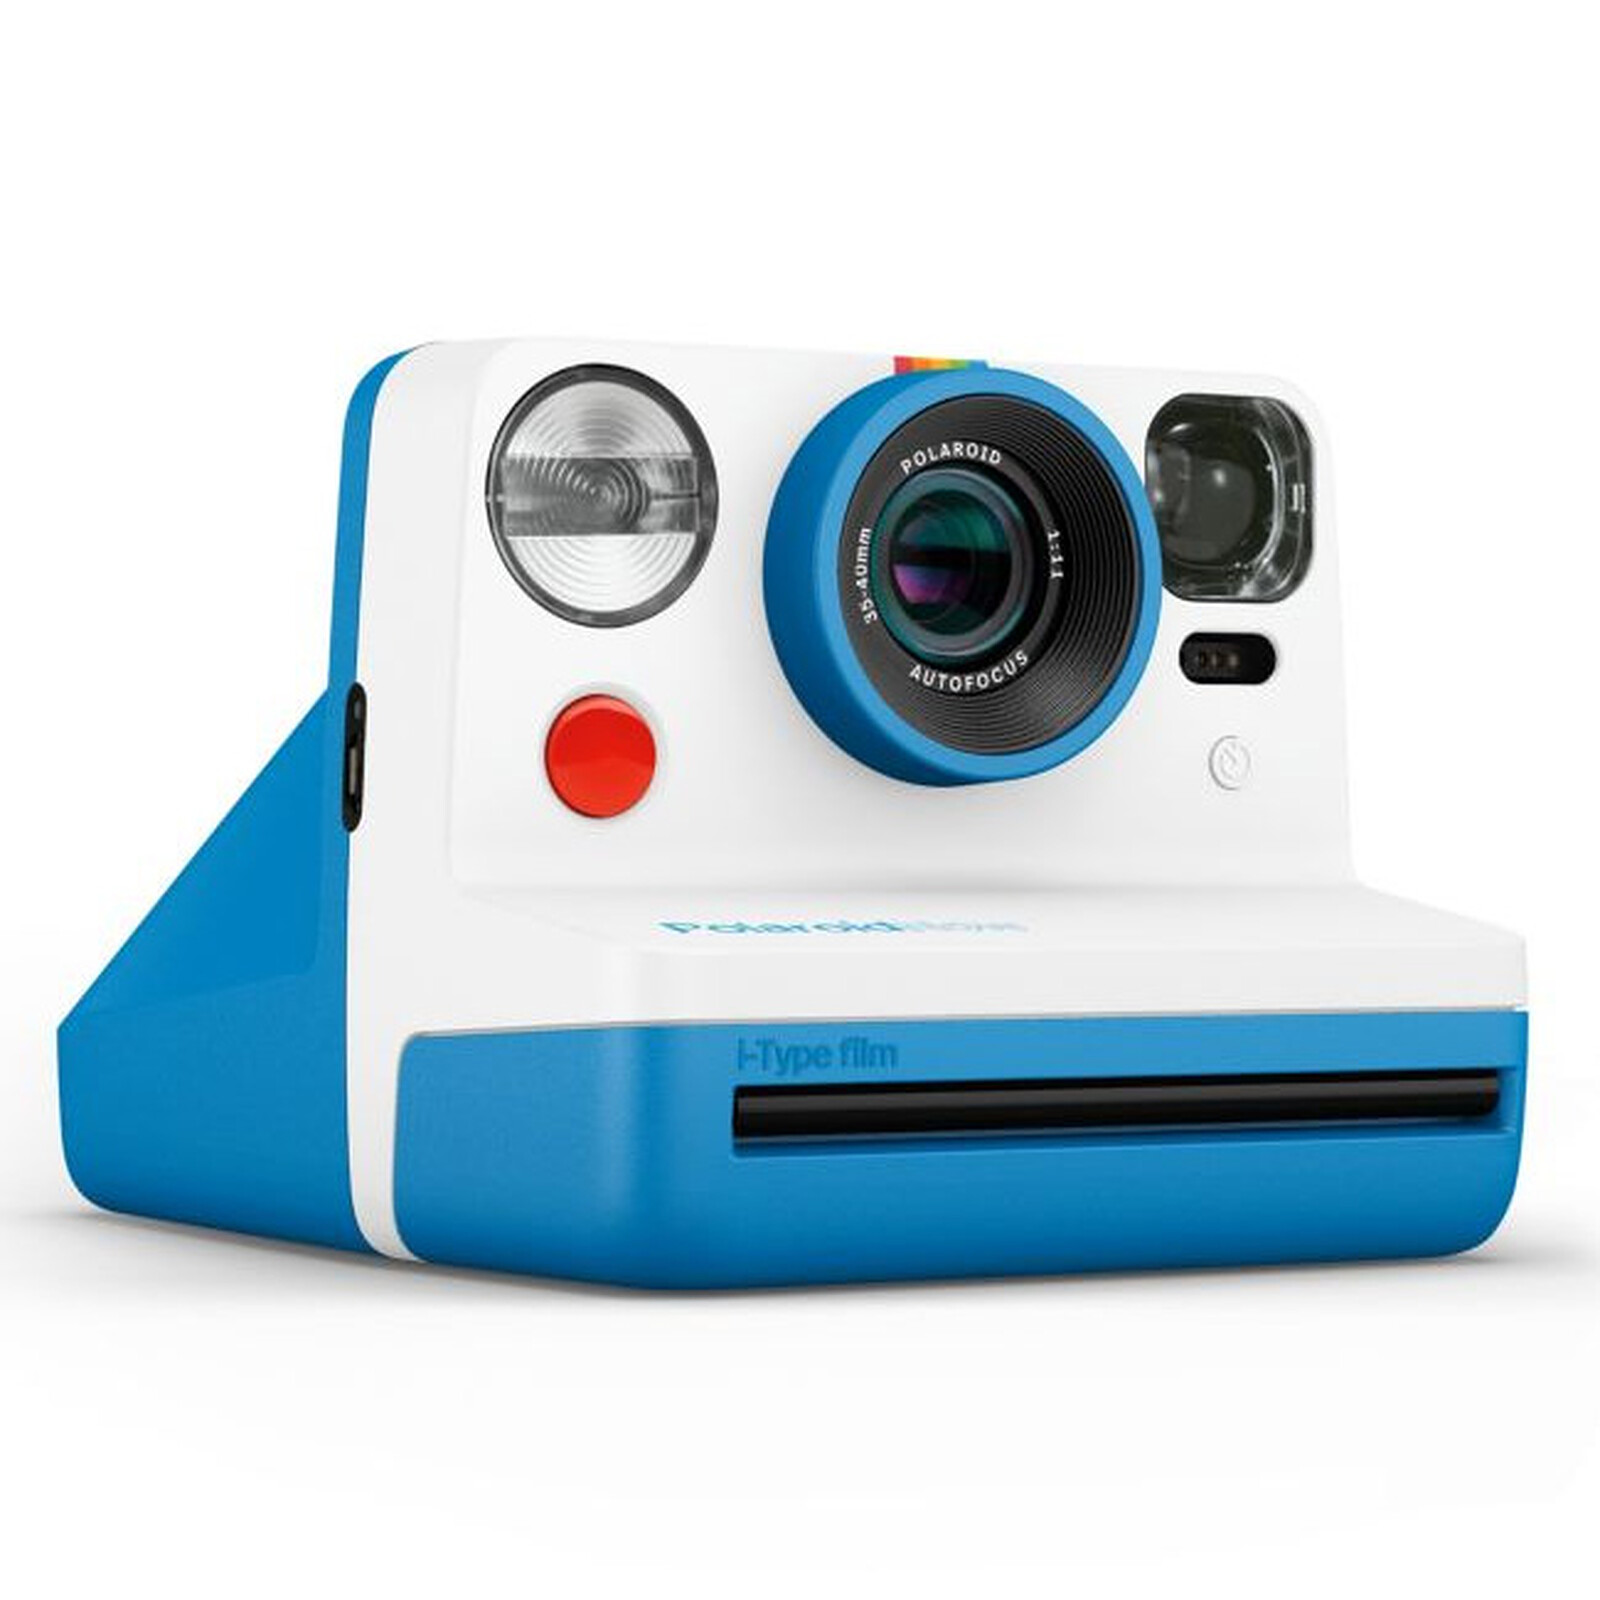 Polaroid ora blu - Fotocamera istantanea - Garanzia 3 anni LDLC